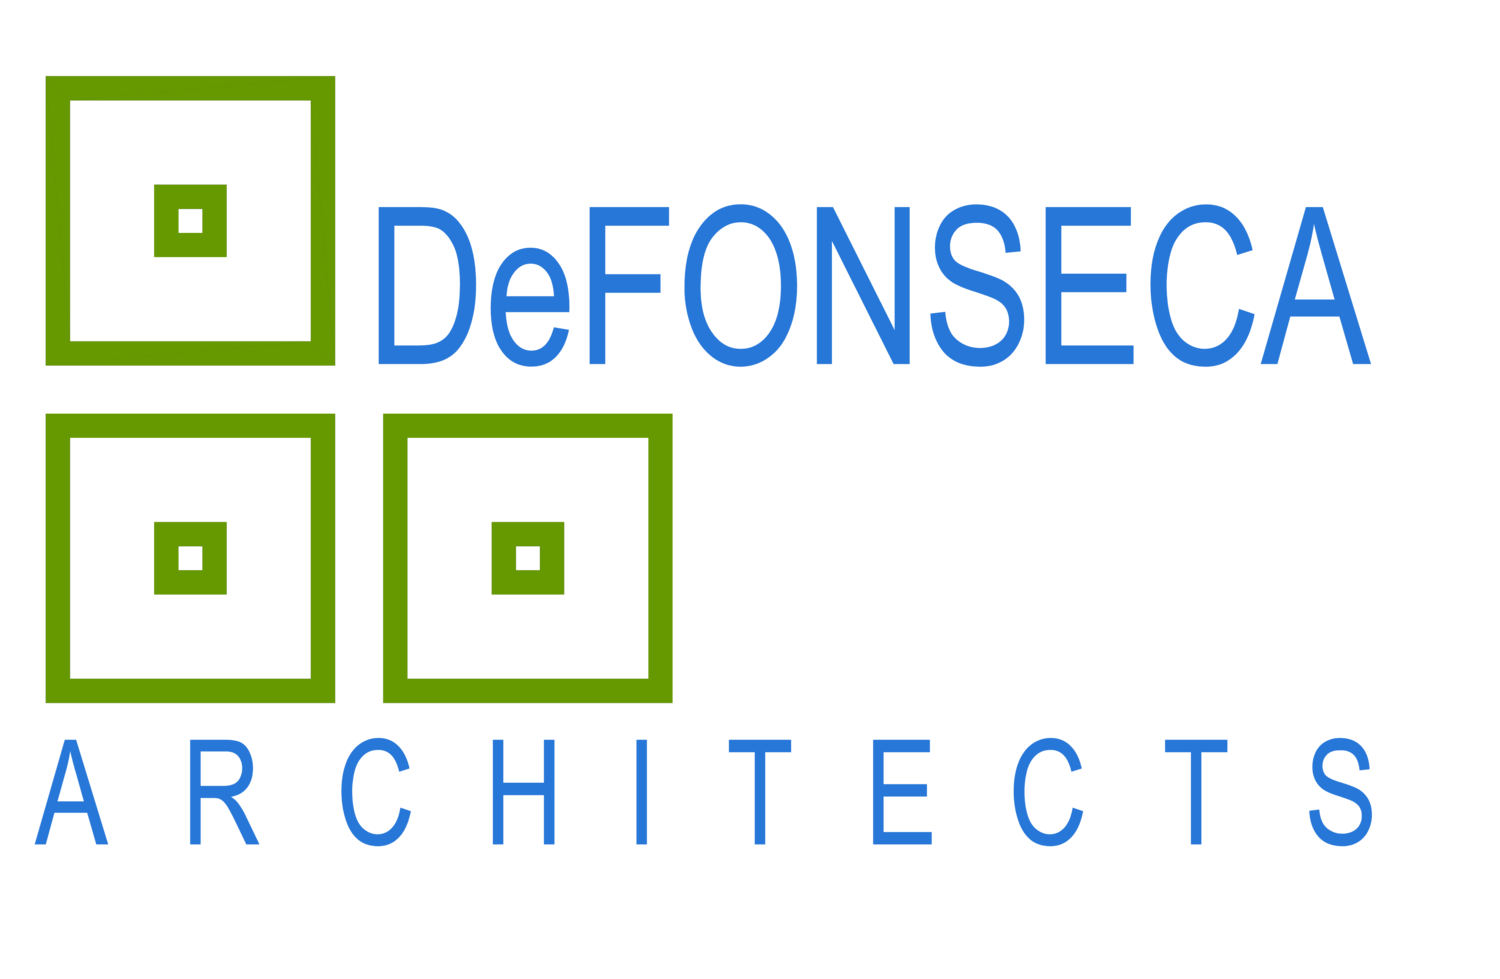 DeFonseca Architect